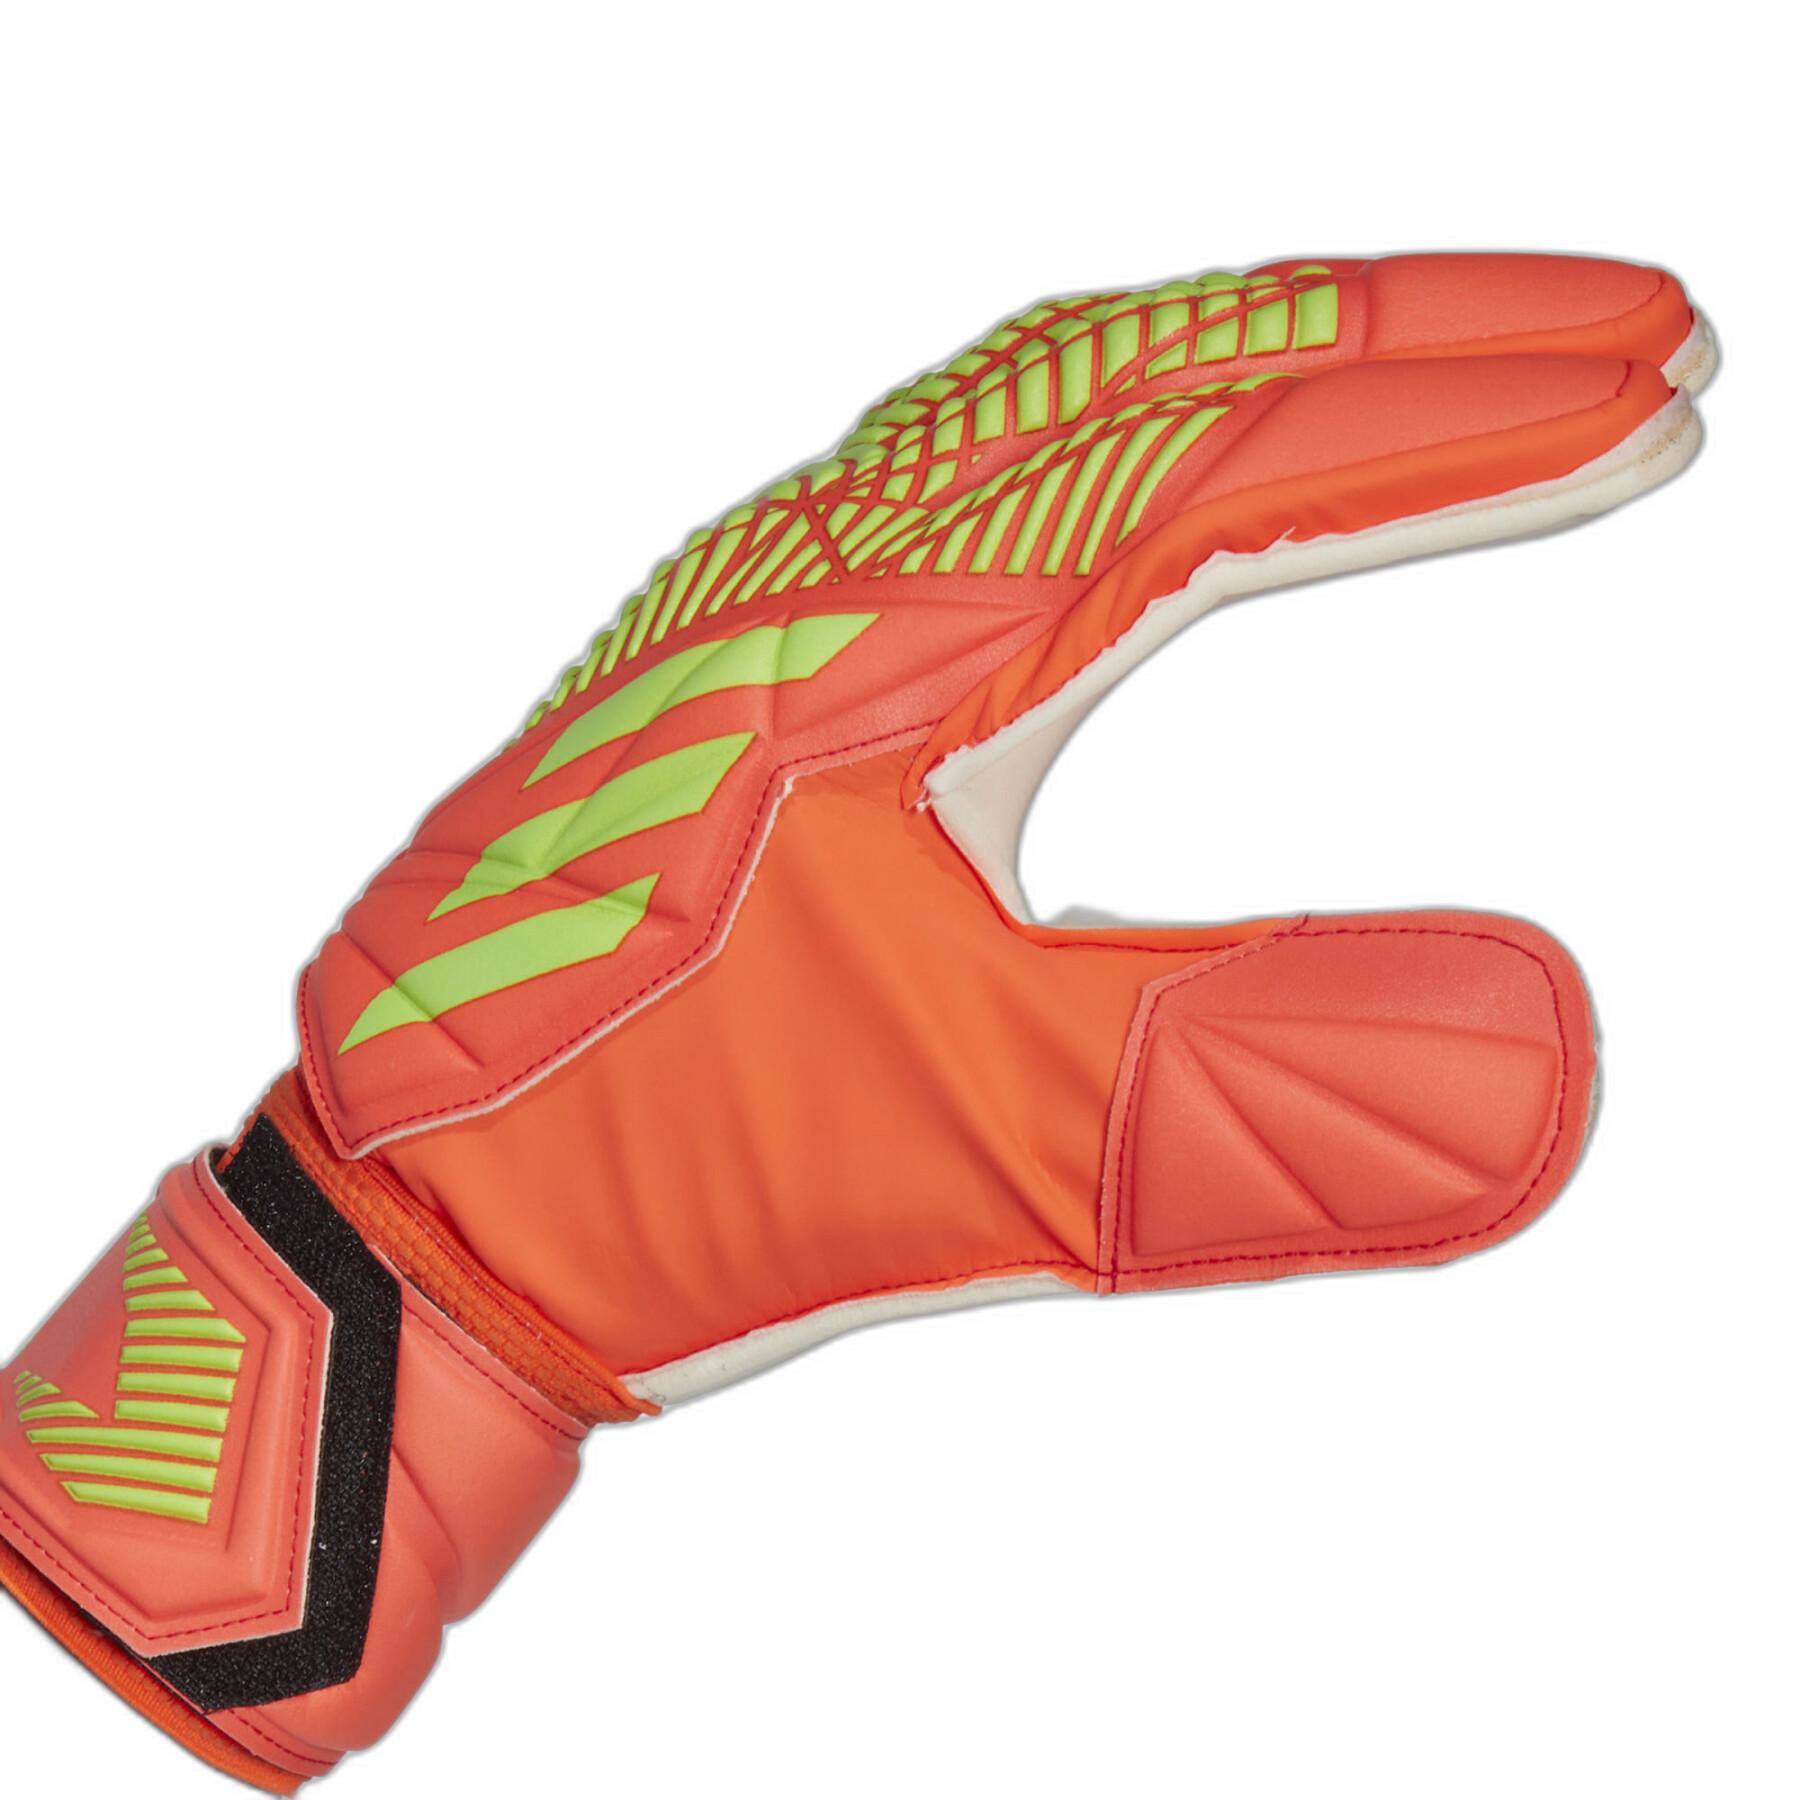 Goalkeeper gloves match adidas Predator Edge